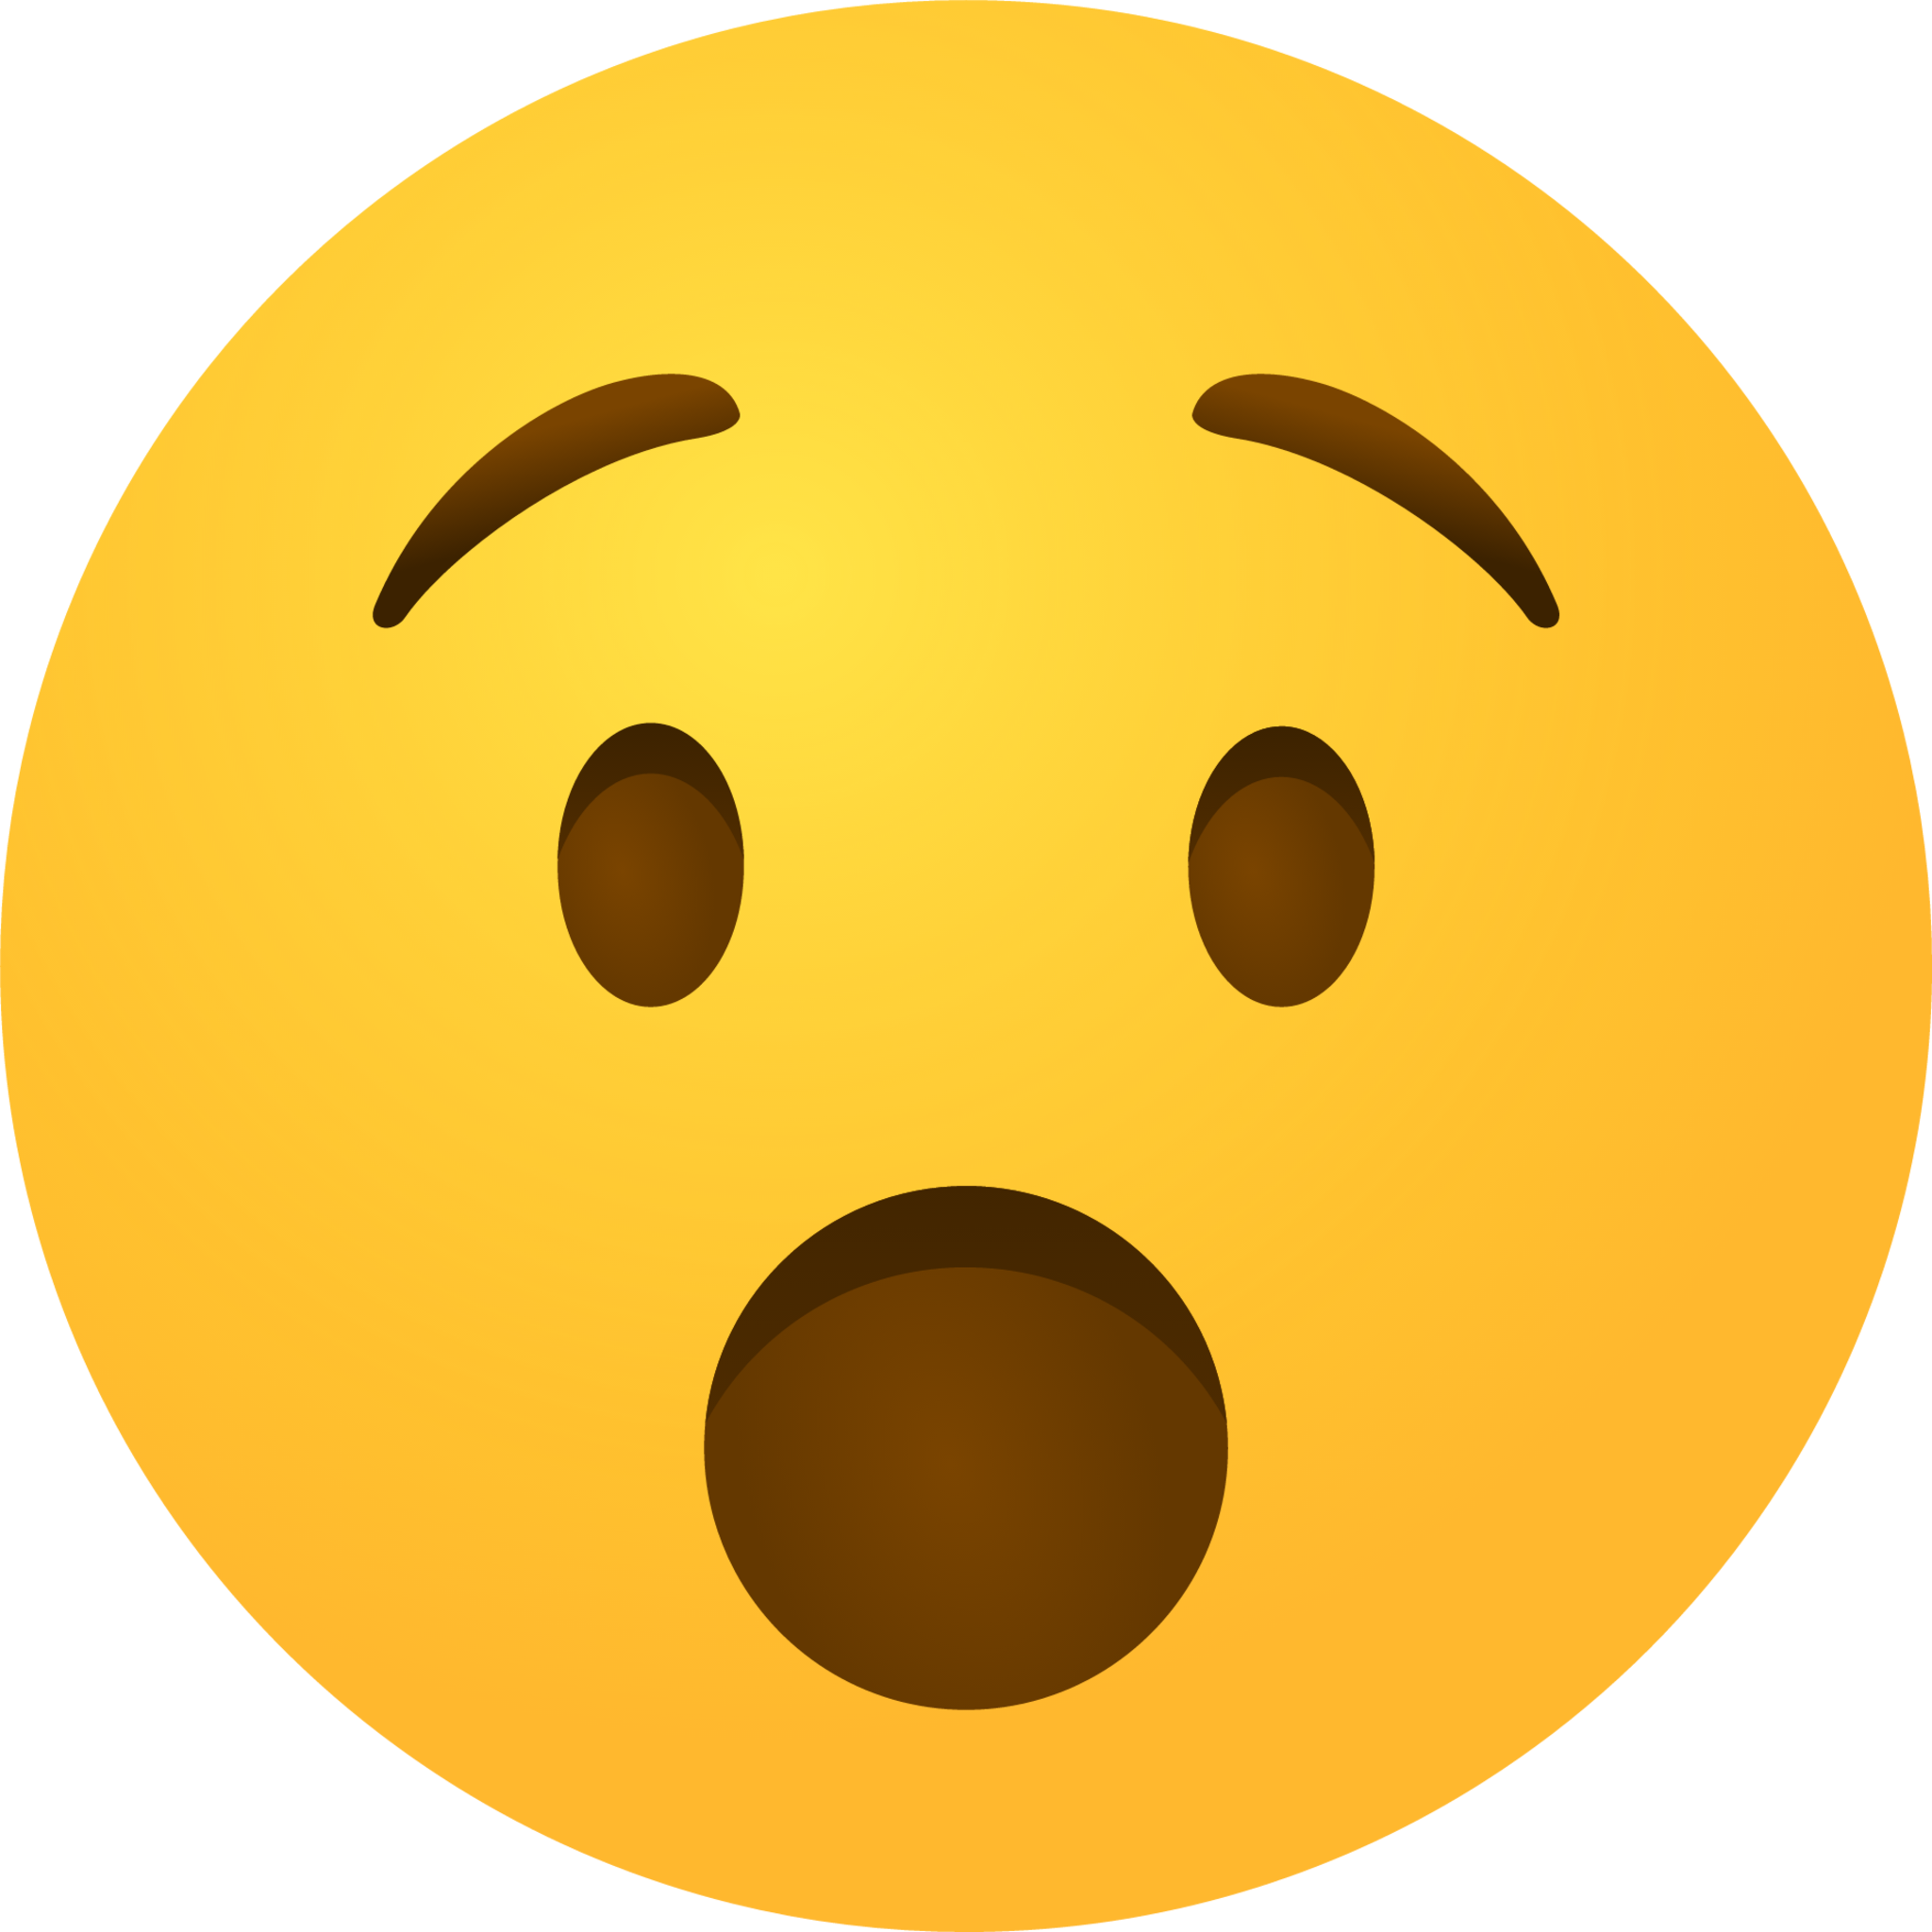 Face with open mouth emoji emoji